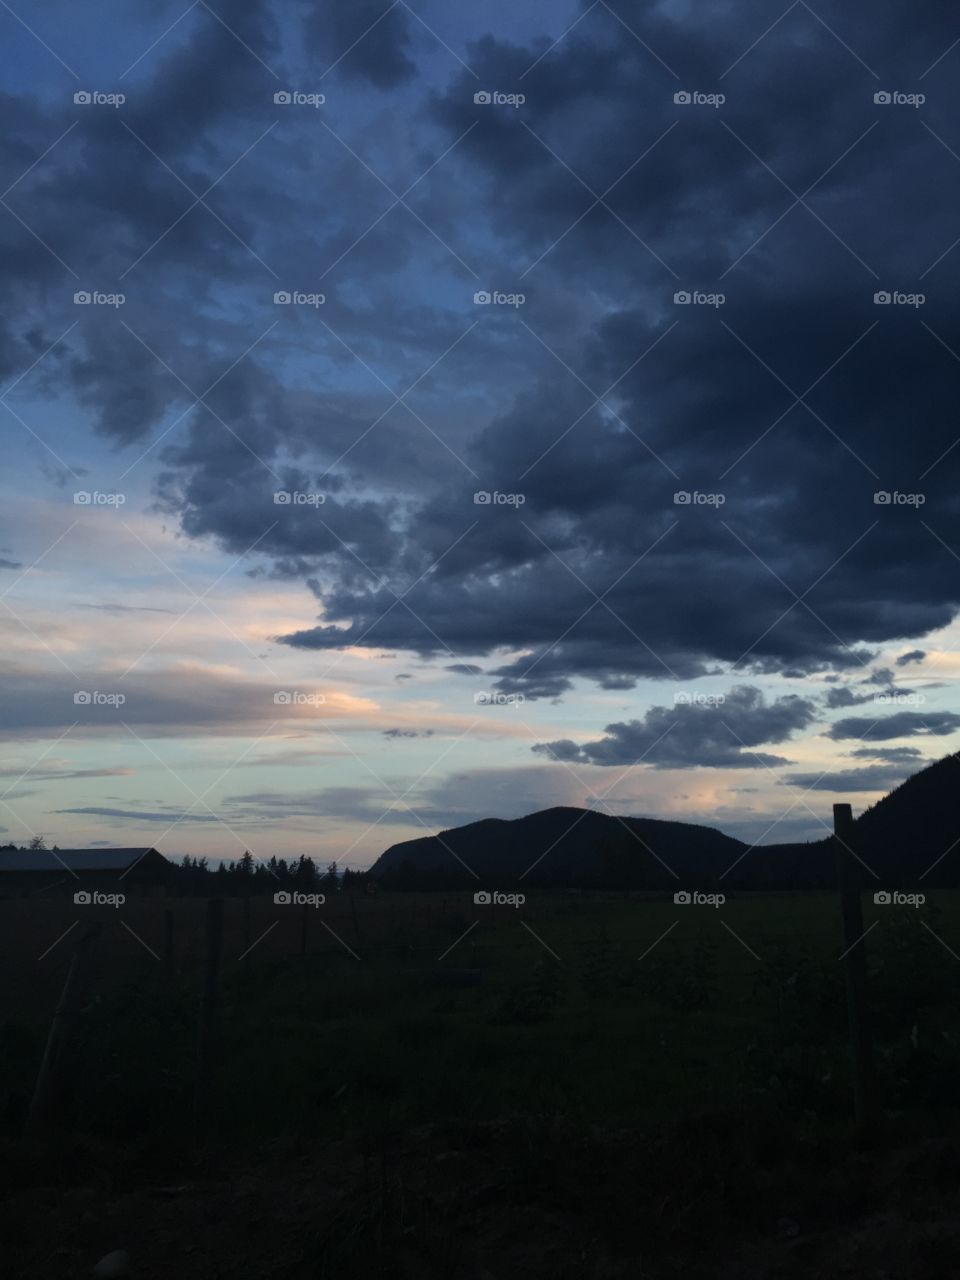 The beautiful evening sky in British Columbia, Canada